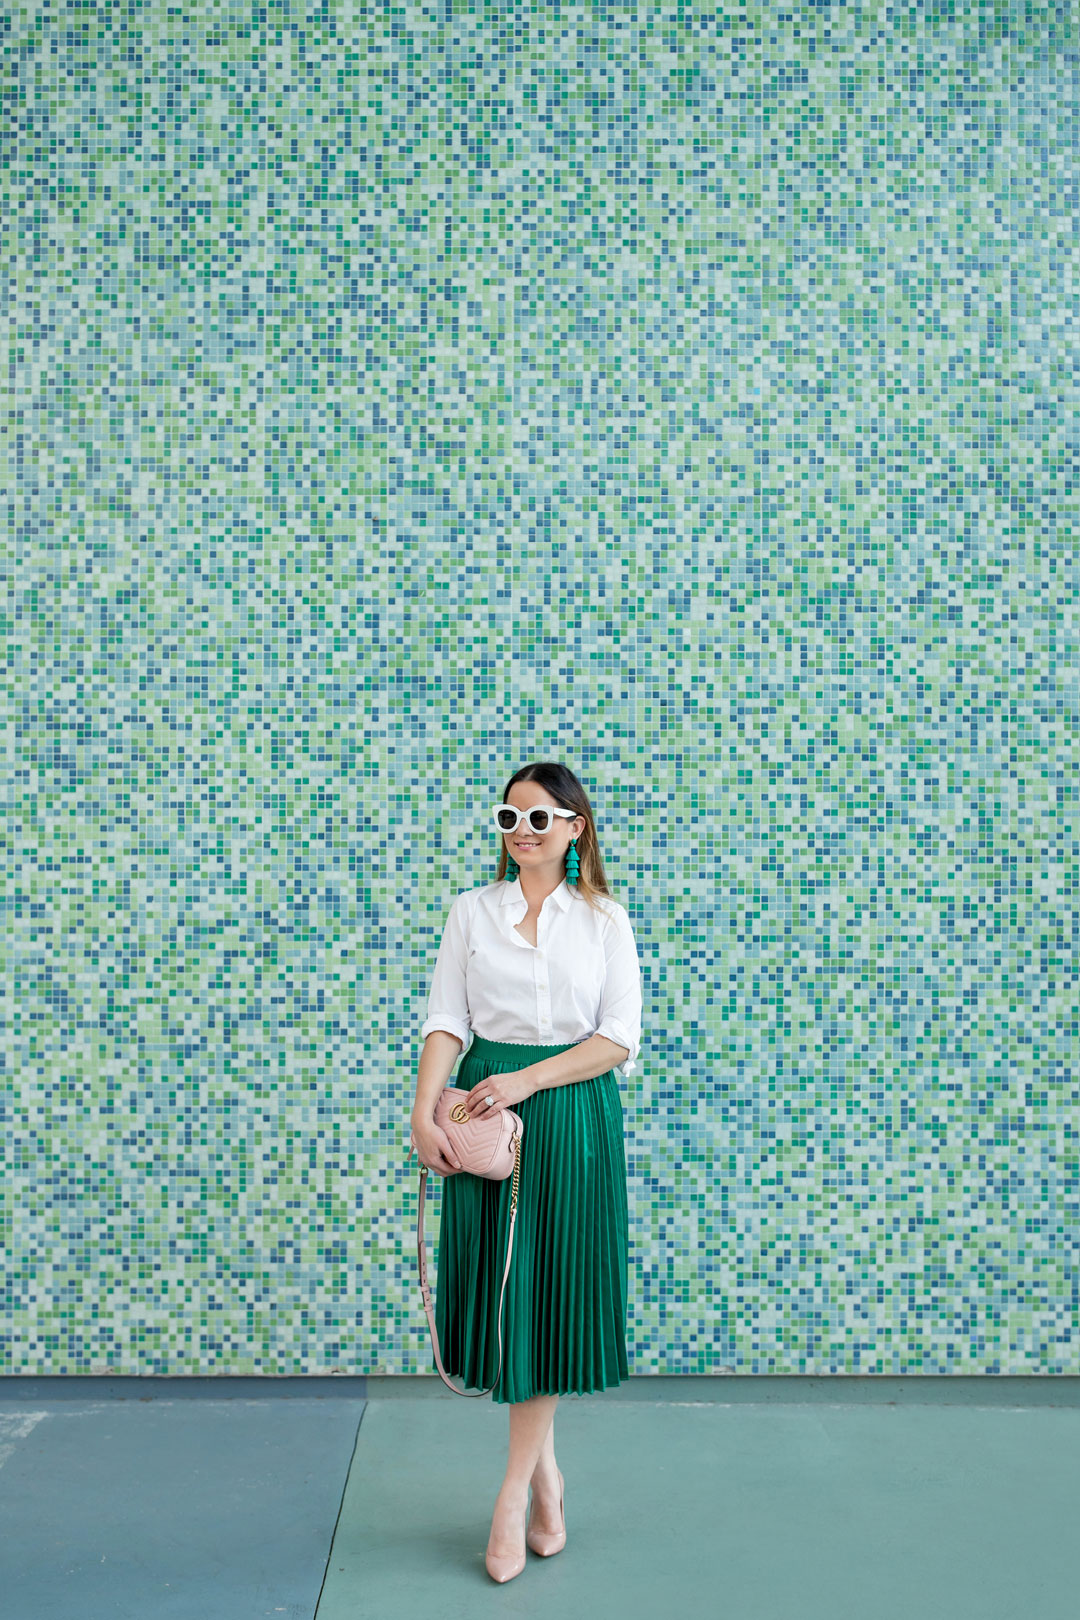 Multicolor Green Tile Wall Houston